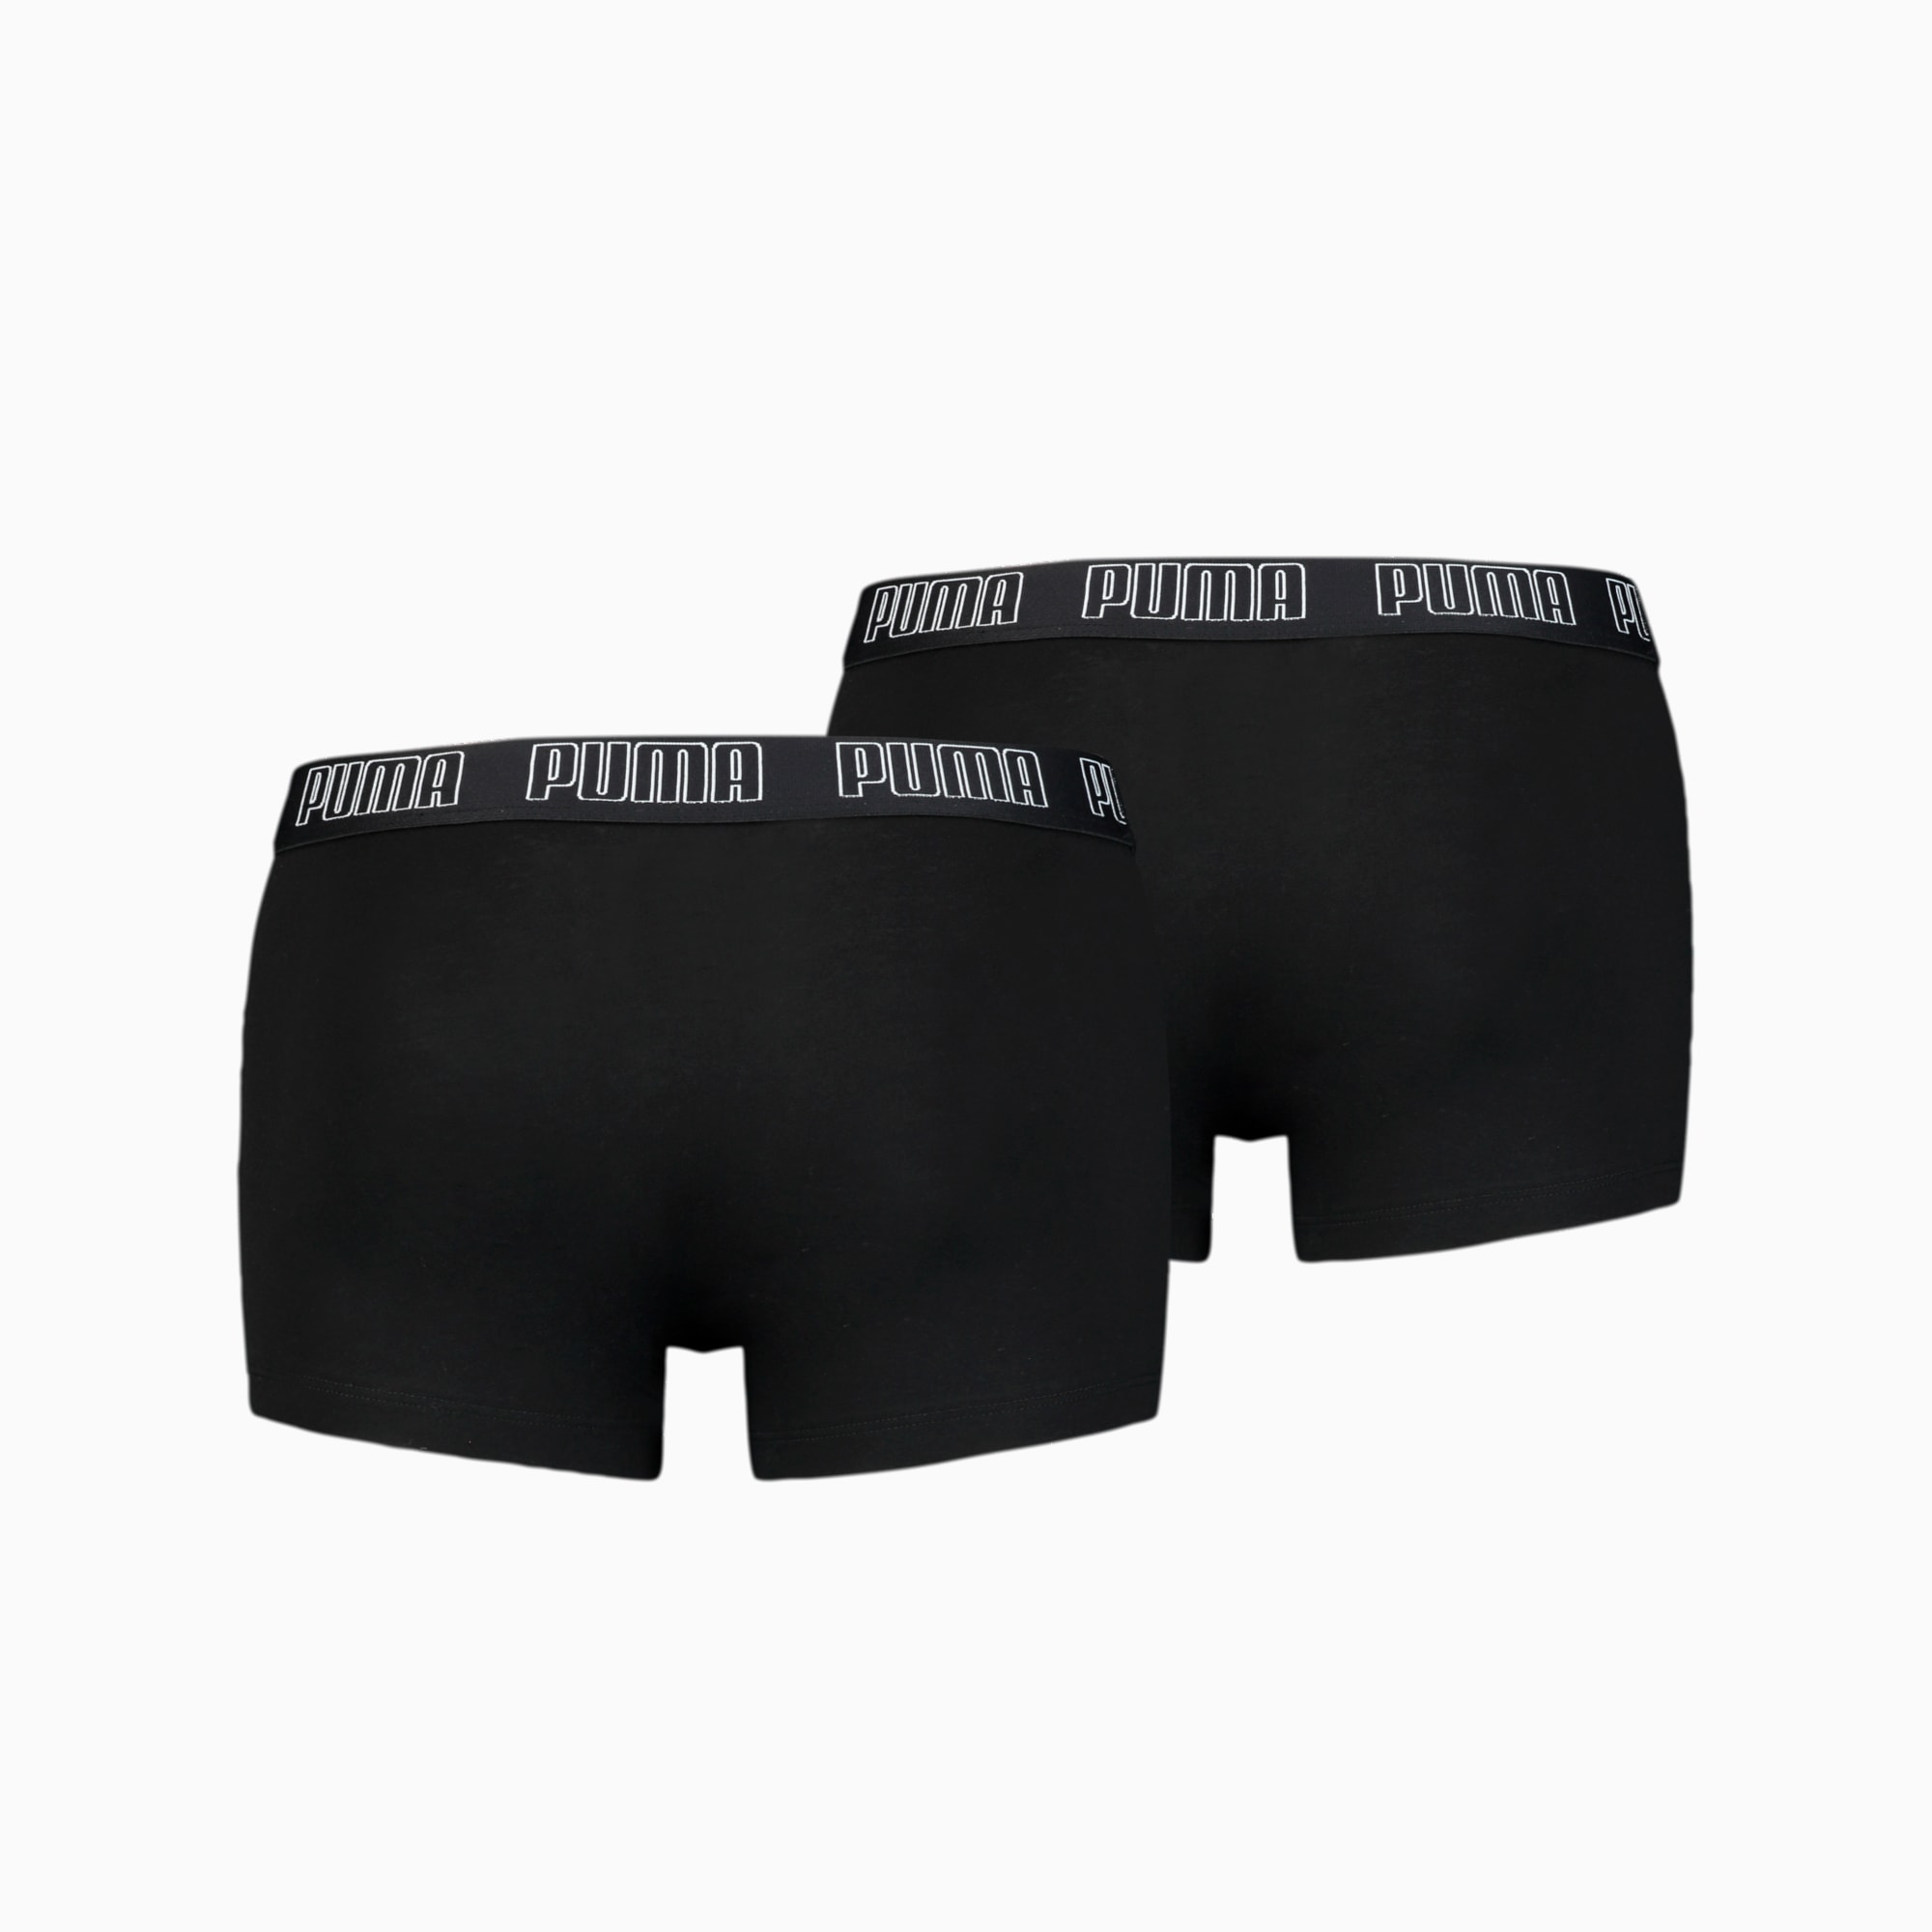 PUMA Basic Men's Trunks 2 Pack, Black, Size M, Clothing